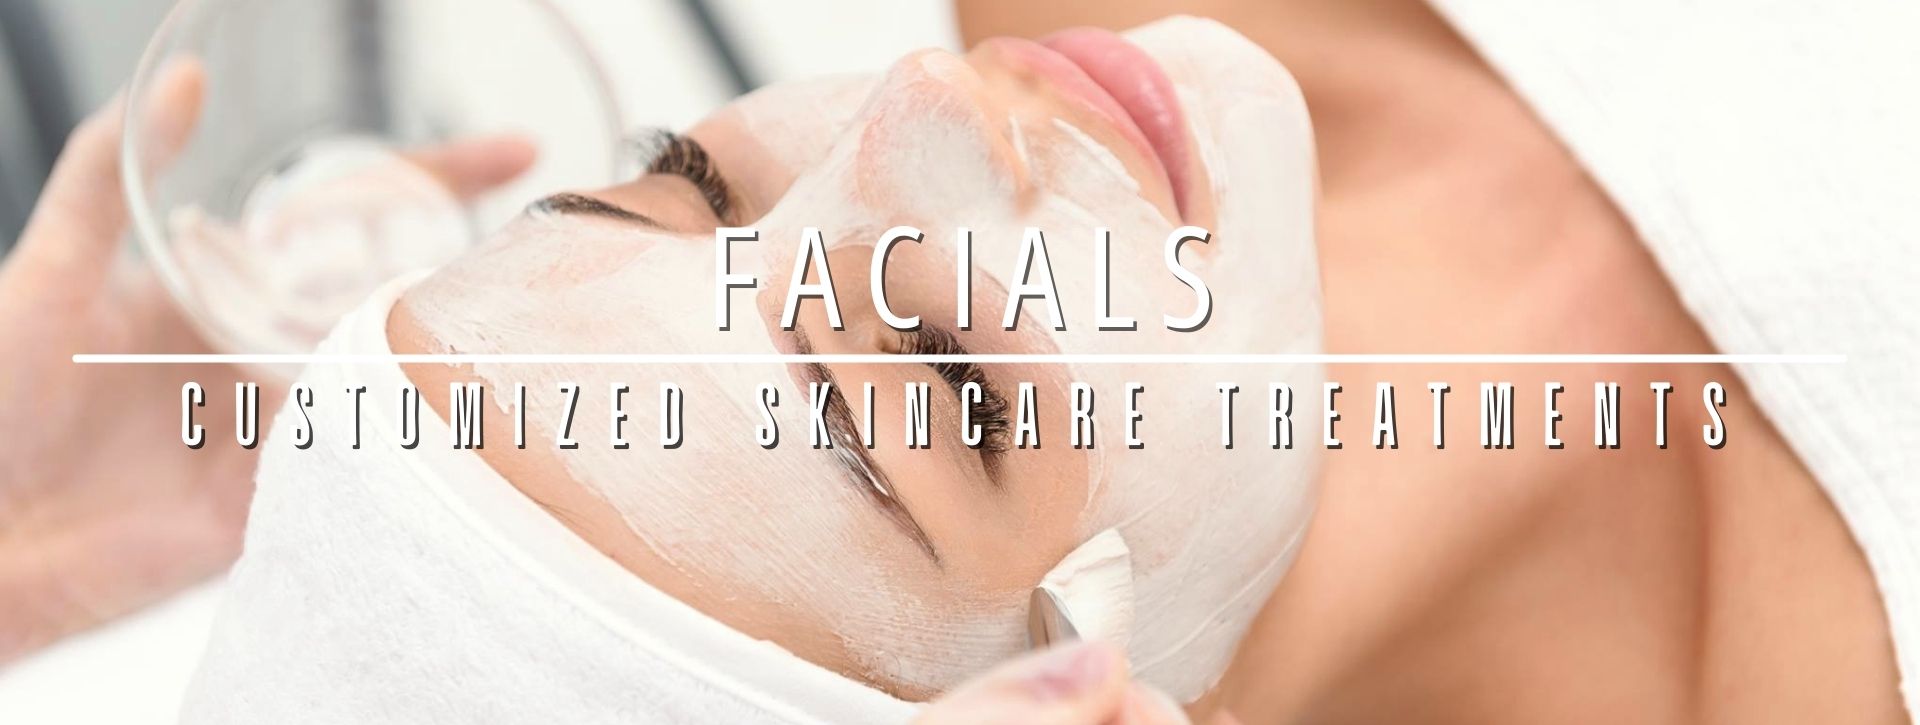 woman having facials treatment promoting customized skincare